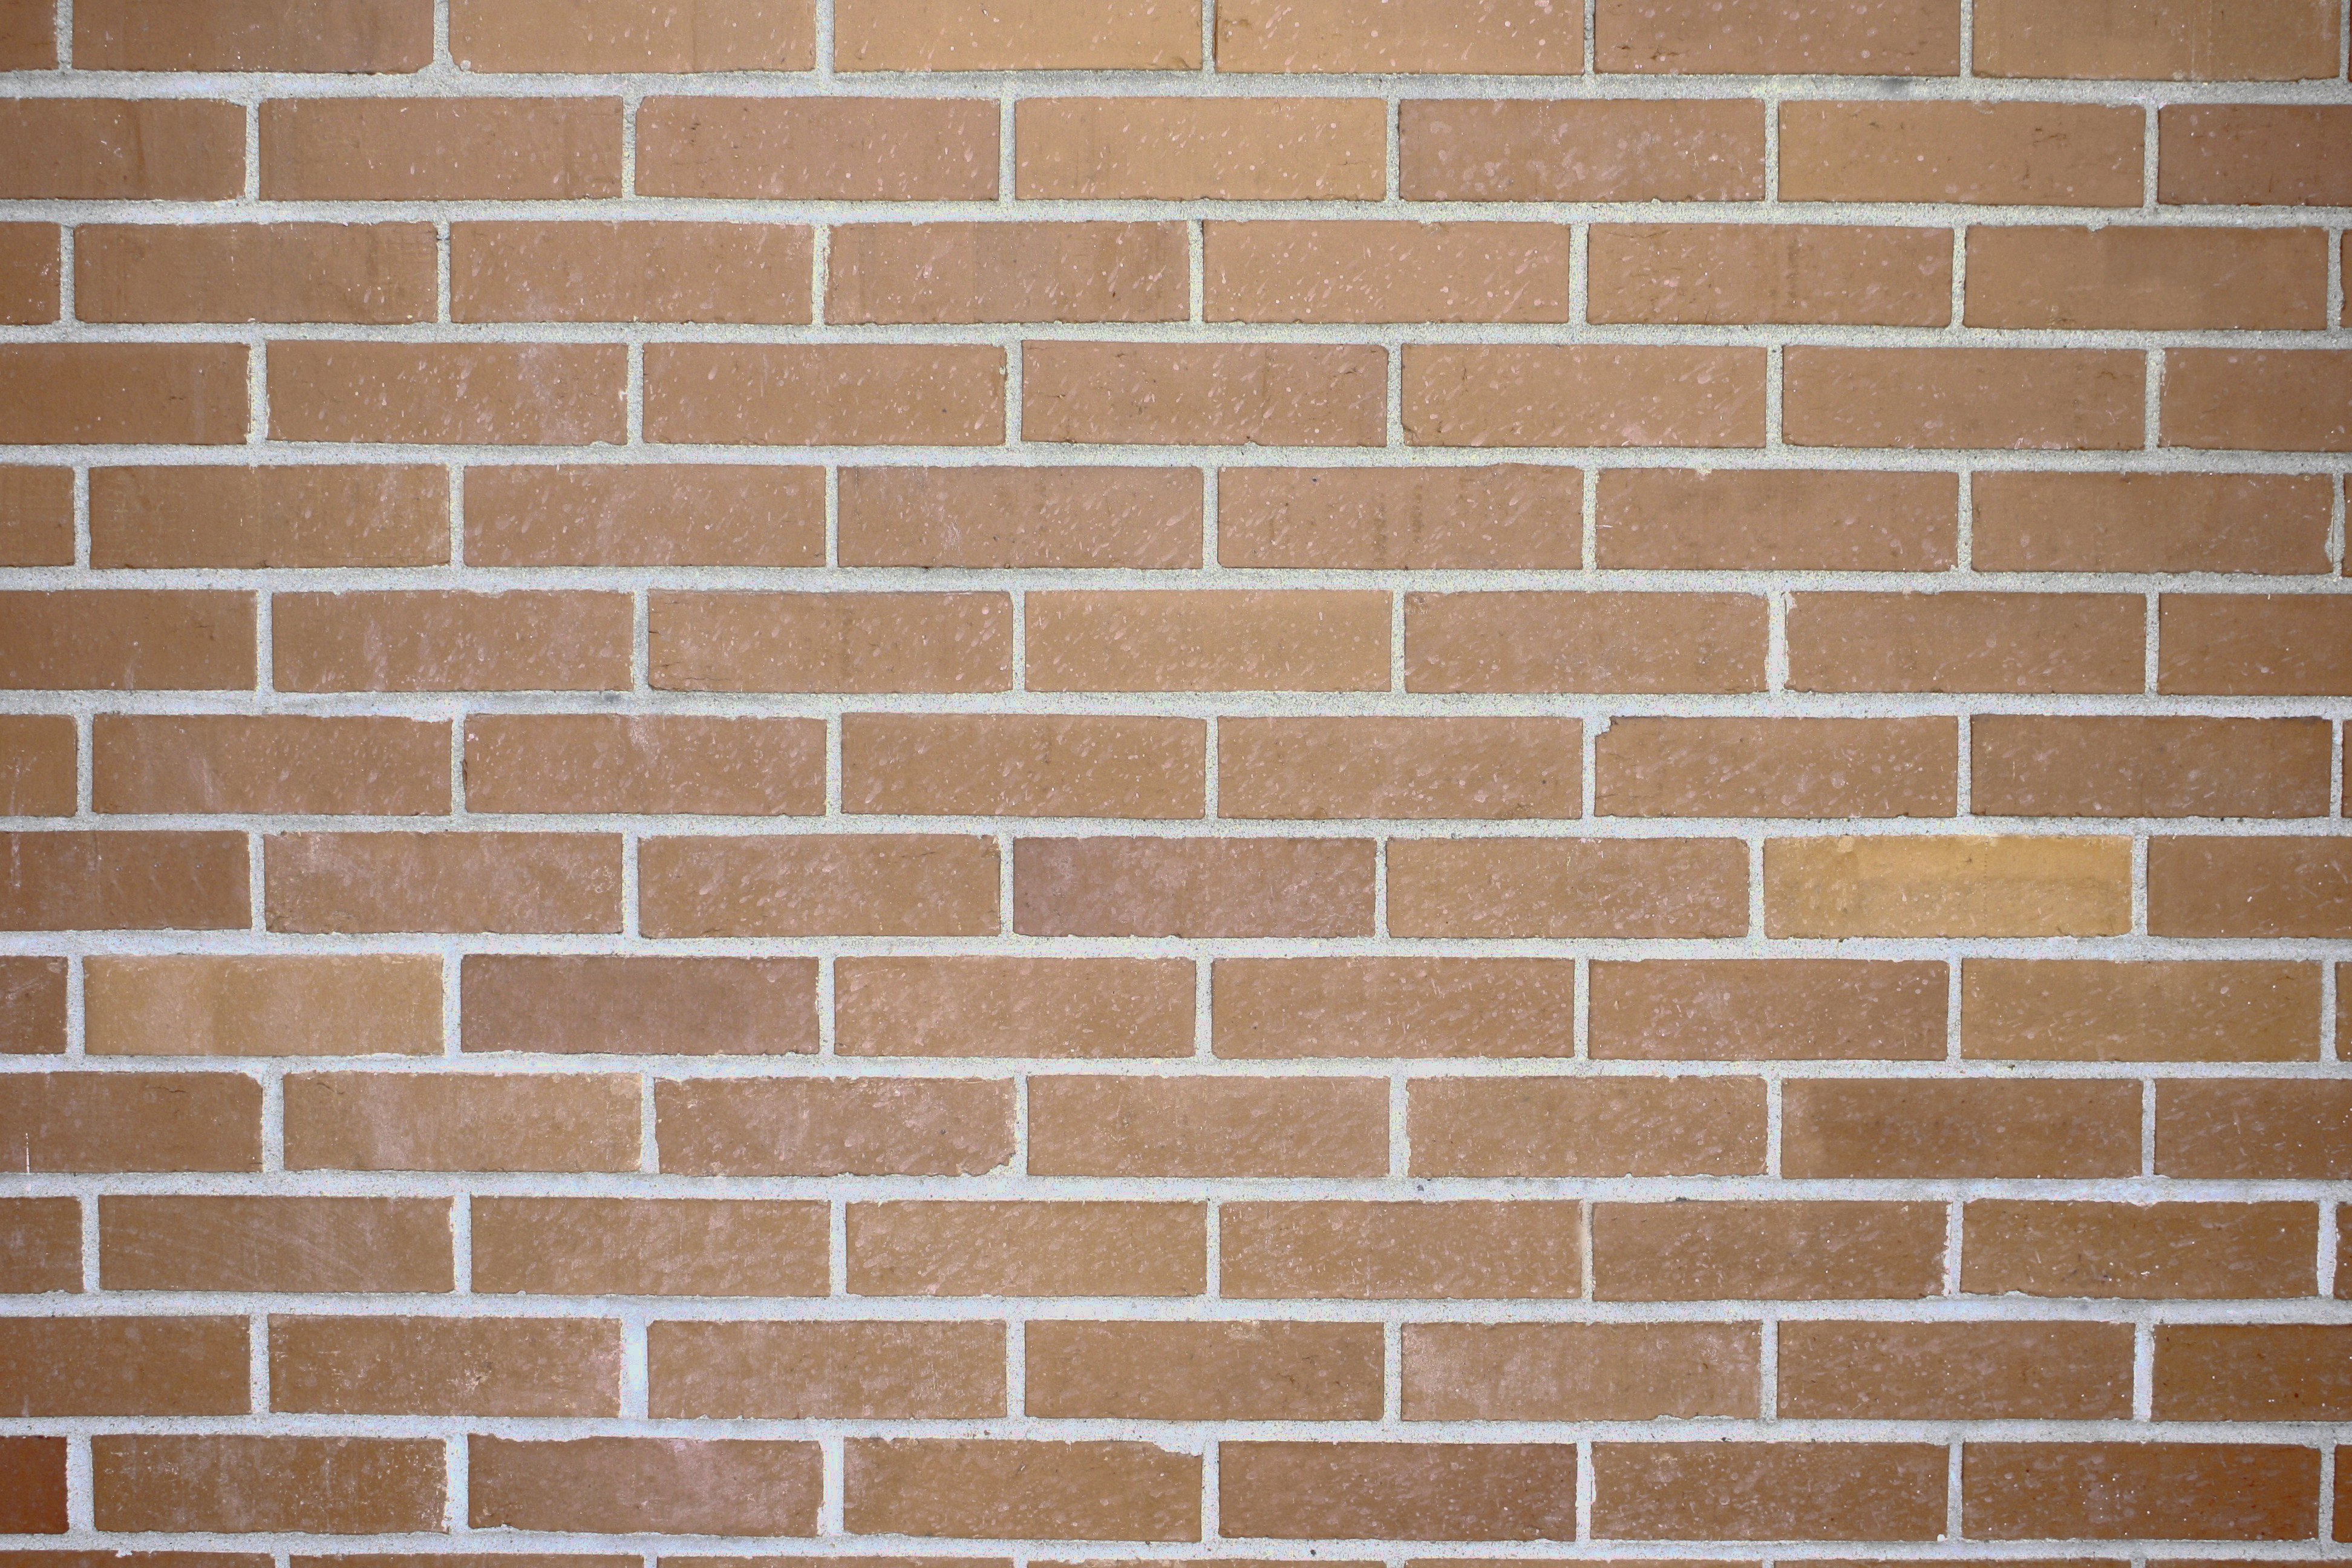 Tan Brick Wall Texture Picture | Free Photograph | Photos Public Domain